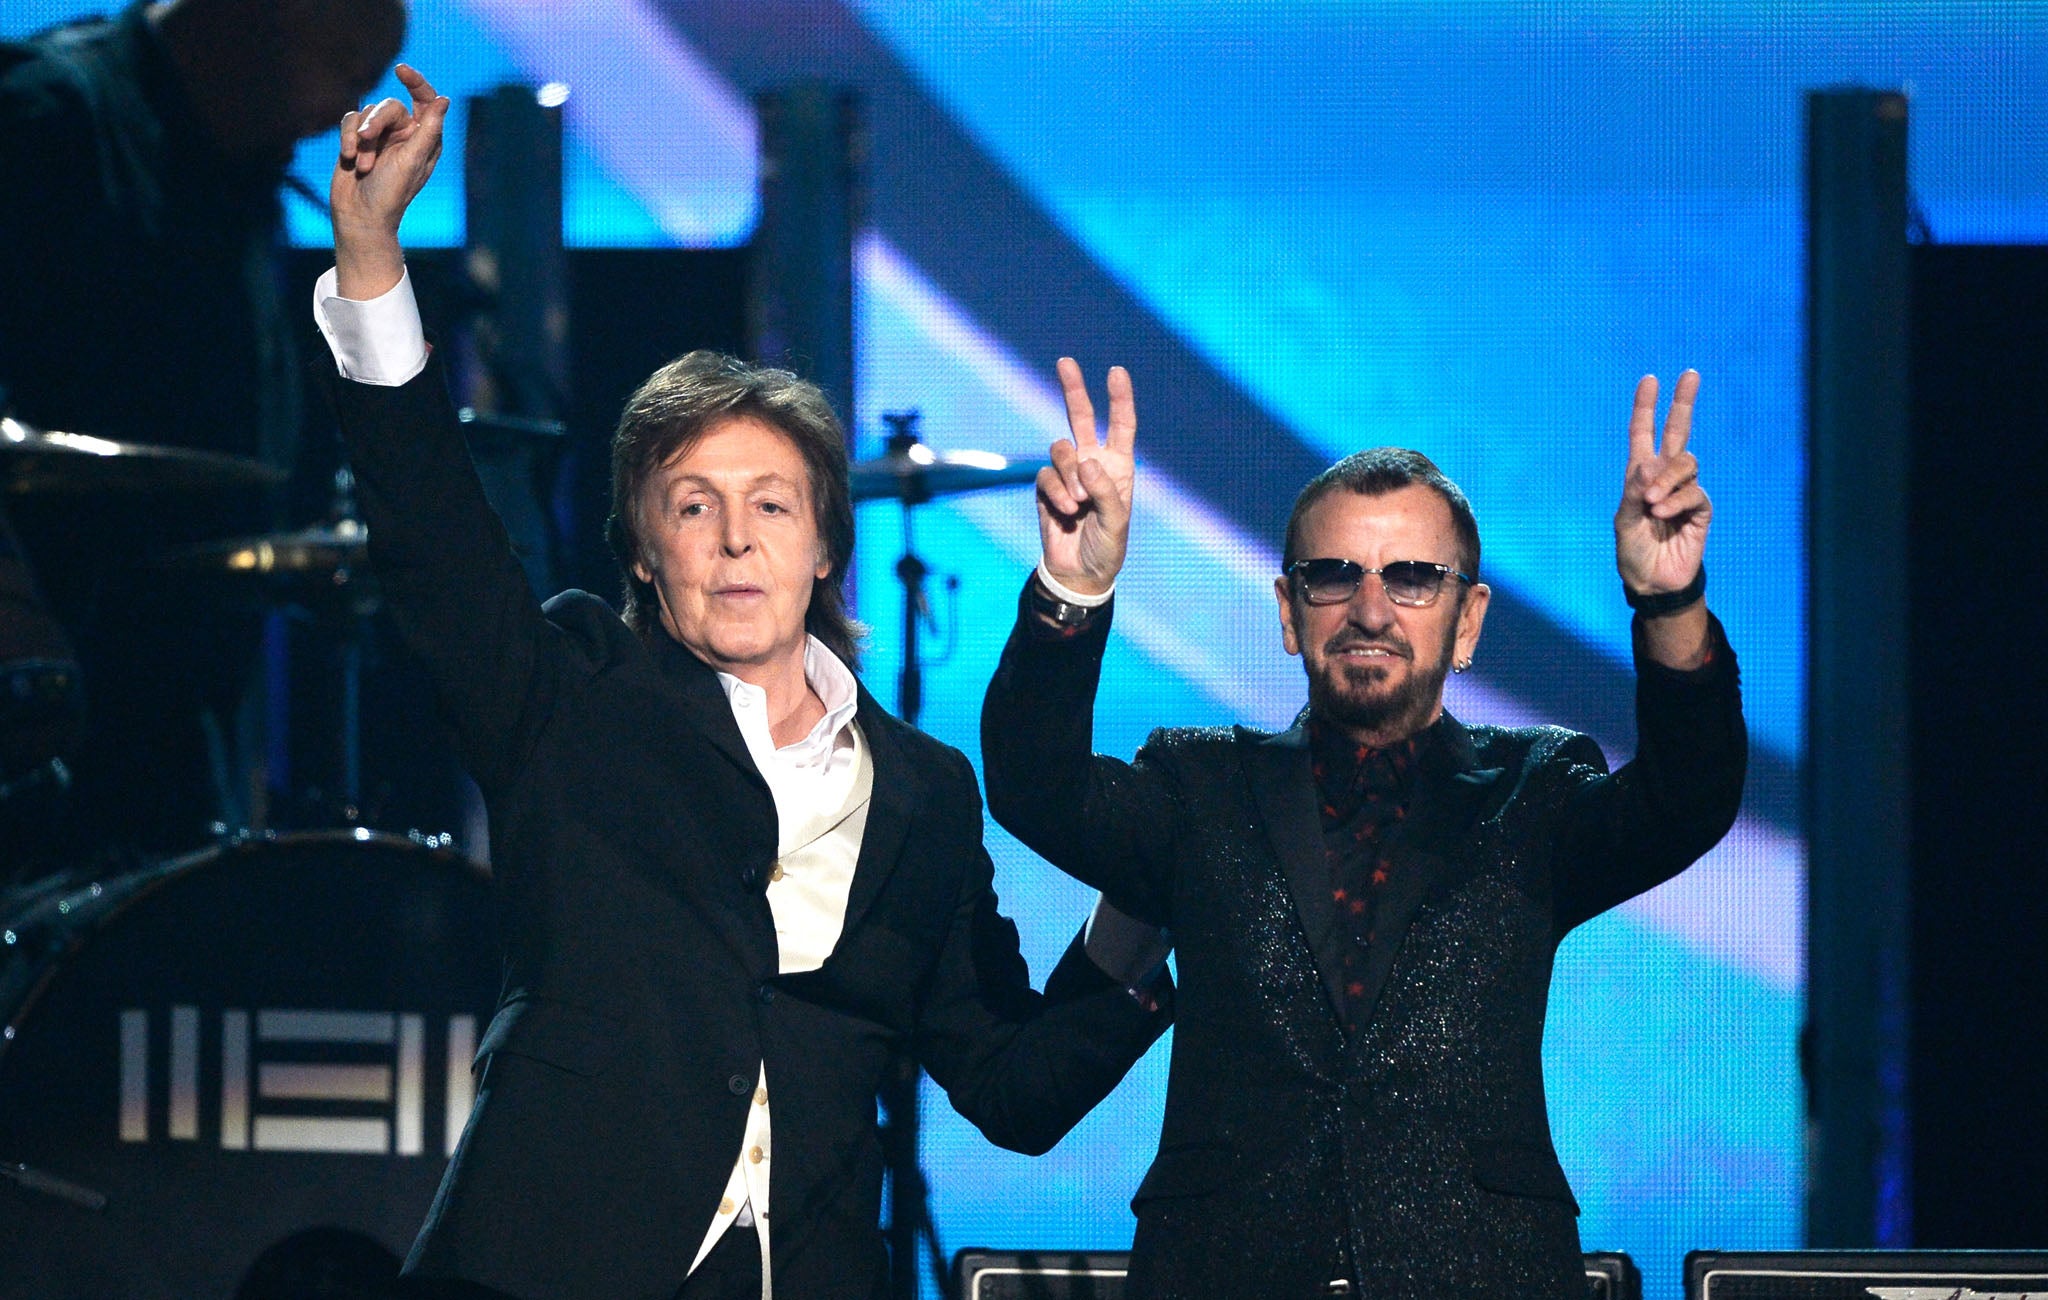 Sir Paul McCartney performs with Ringo Starr